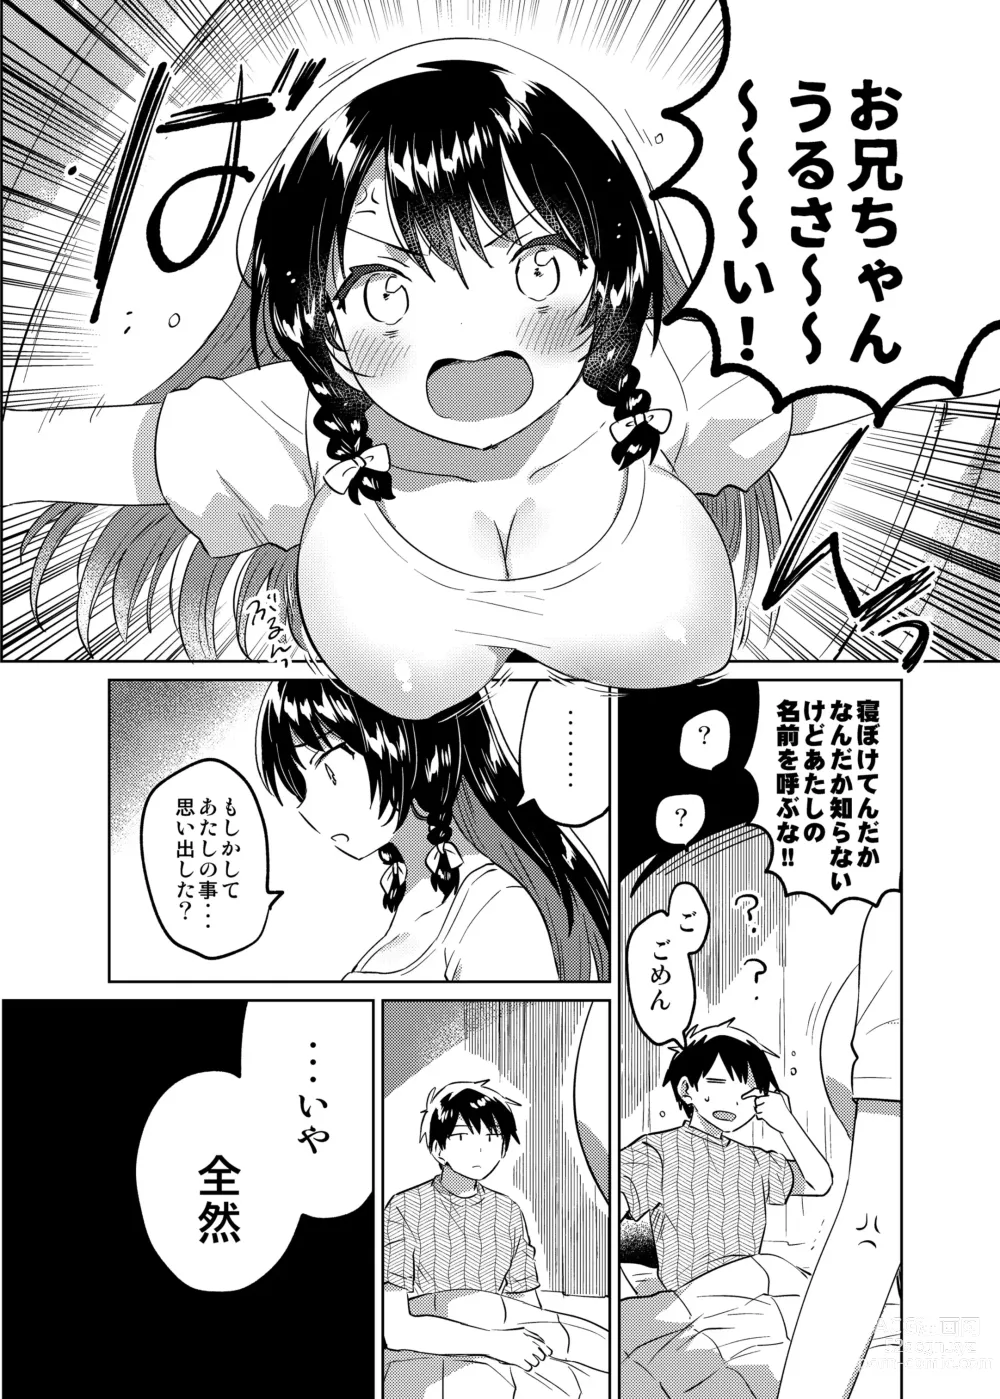 Page 3 of doujinshi Onii-chan wa Amnesia